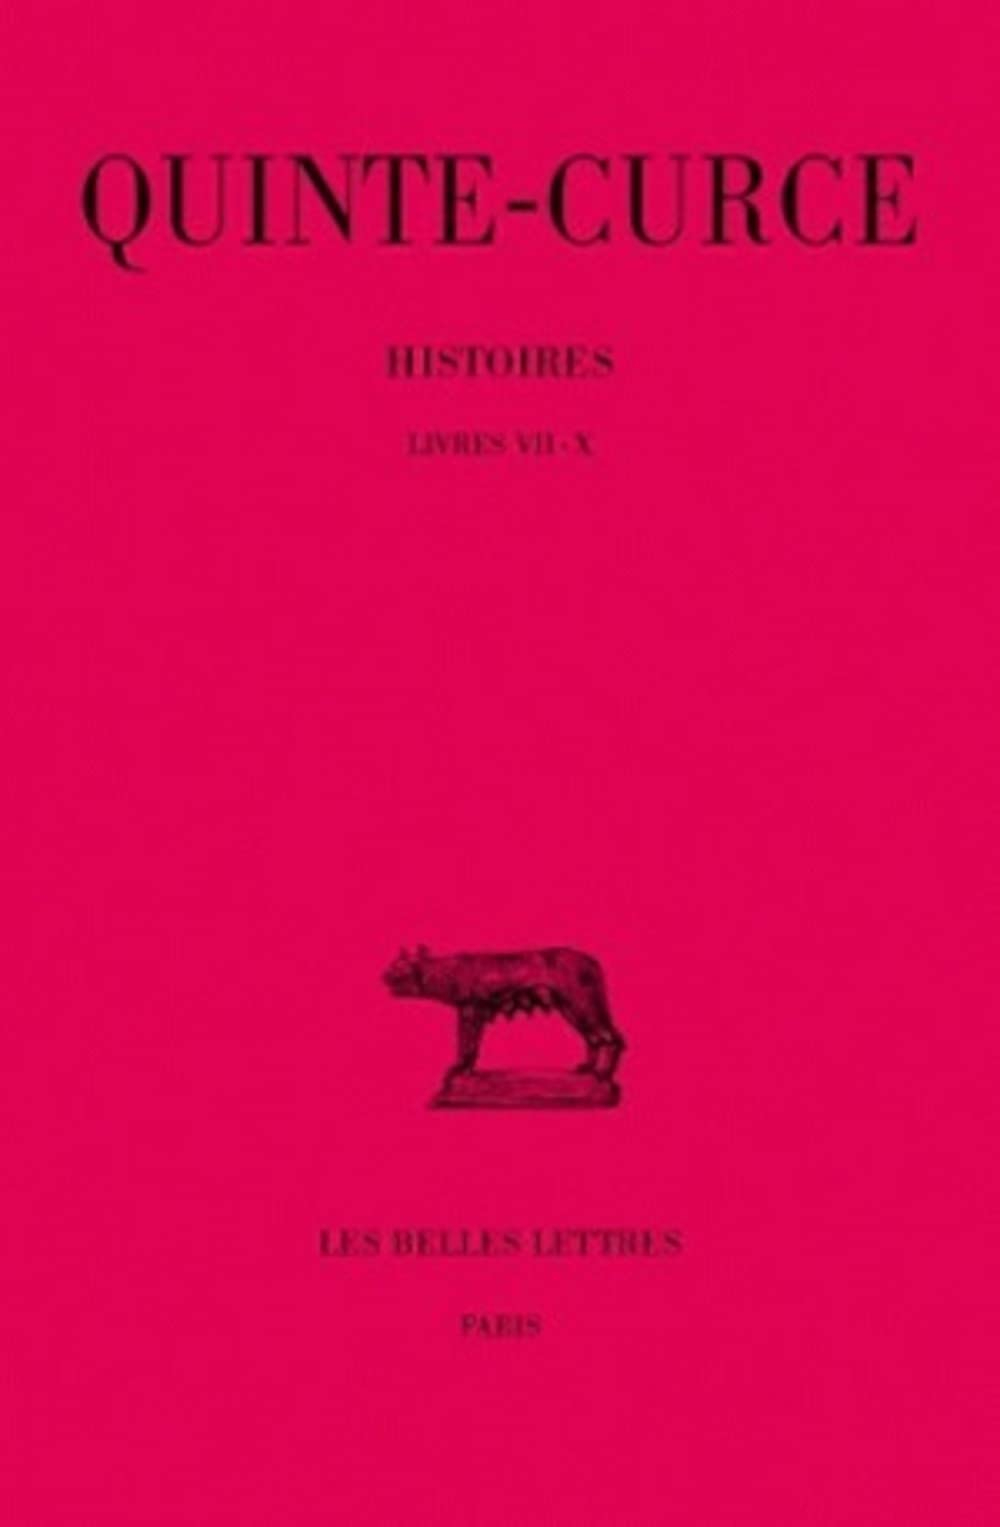 Histoires. Vol. 2. Livres VII-X